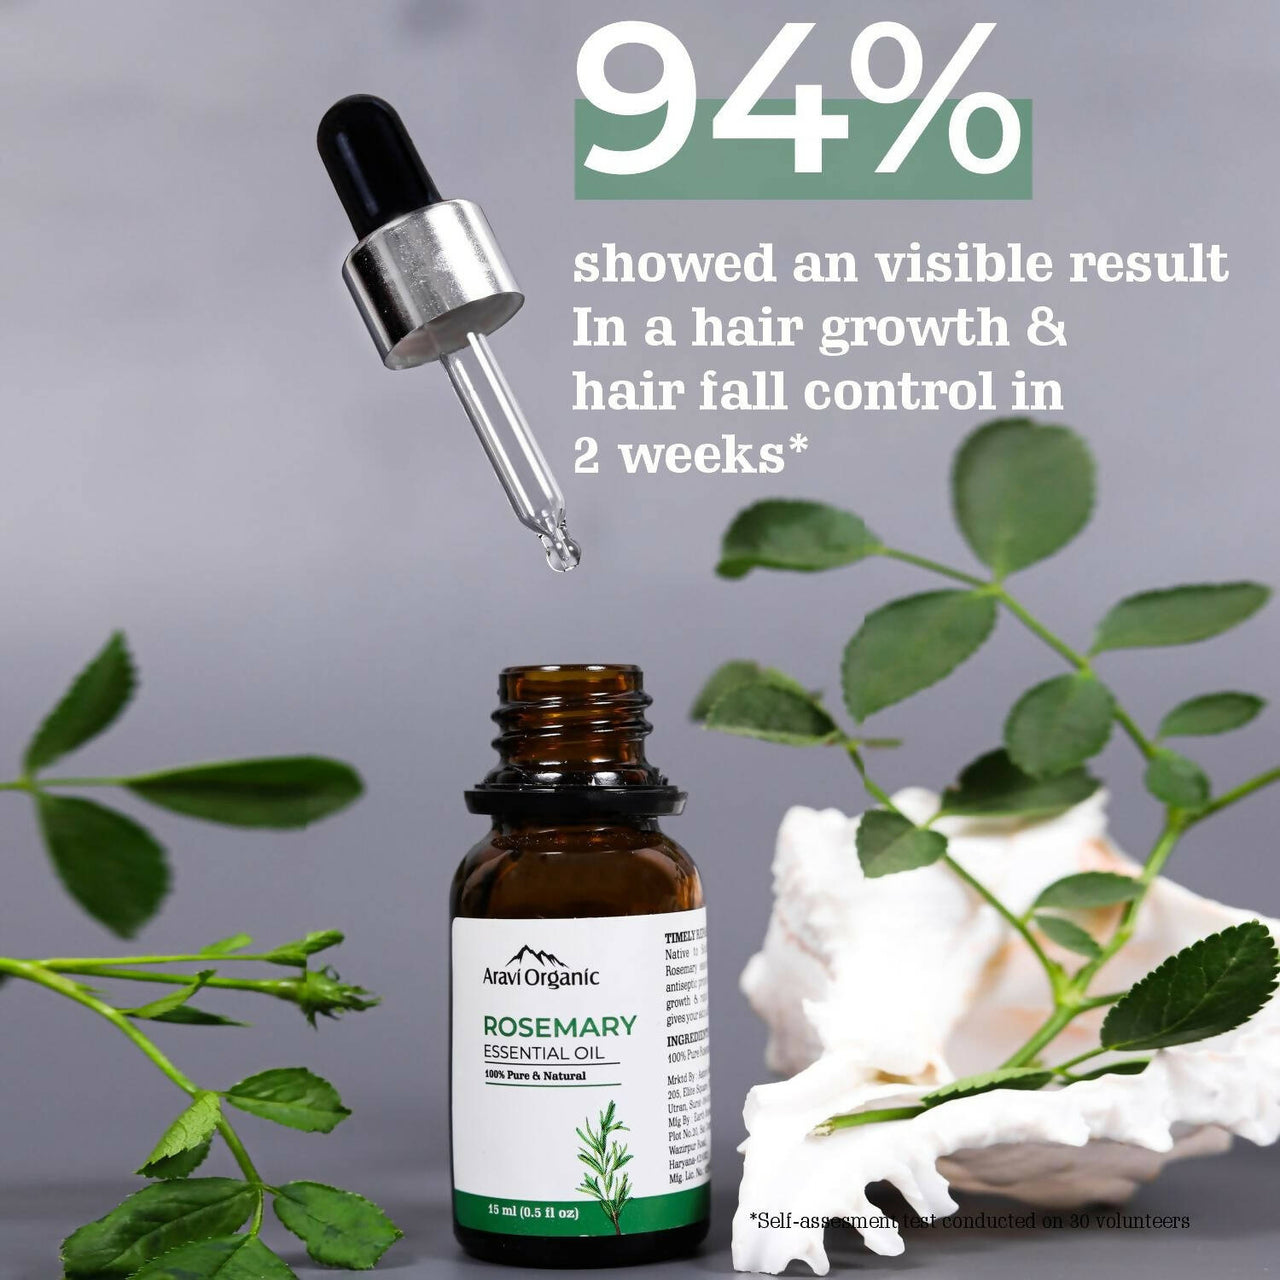 Aravi Organic Rosemary Hair Growth Essential Oil - Distacart